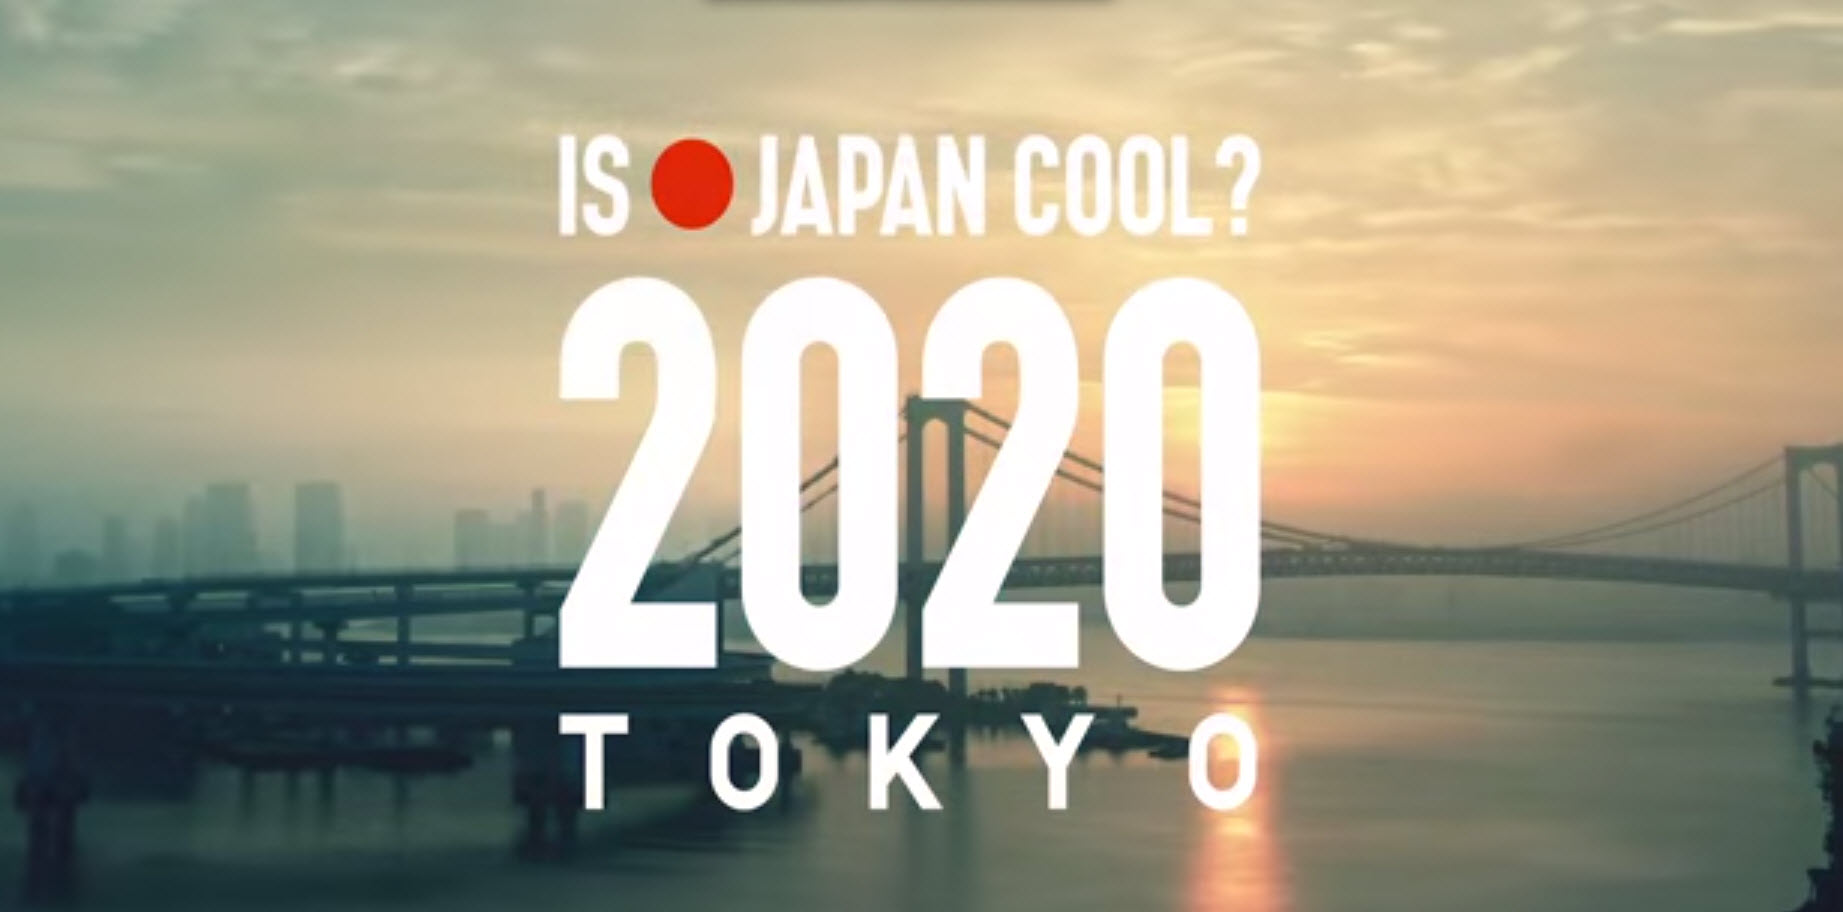 Tokyo 2020 Olympics Japan is cool